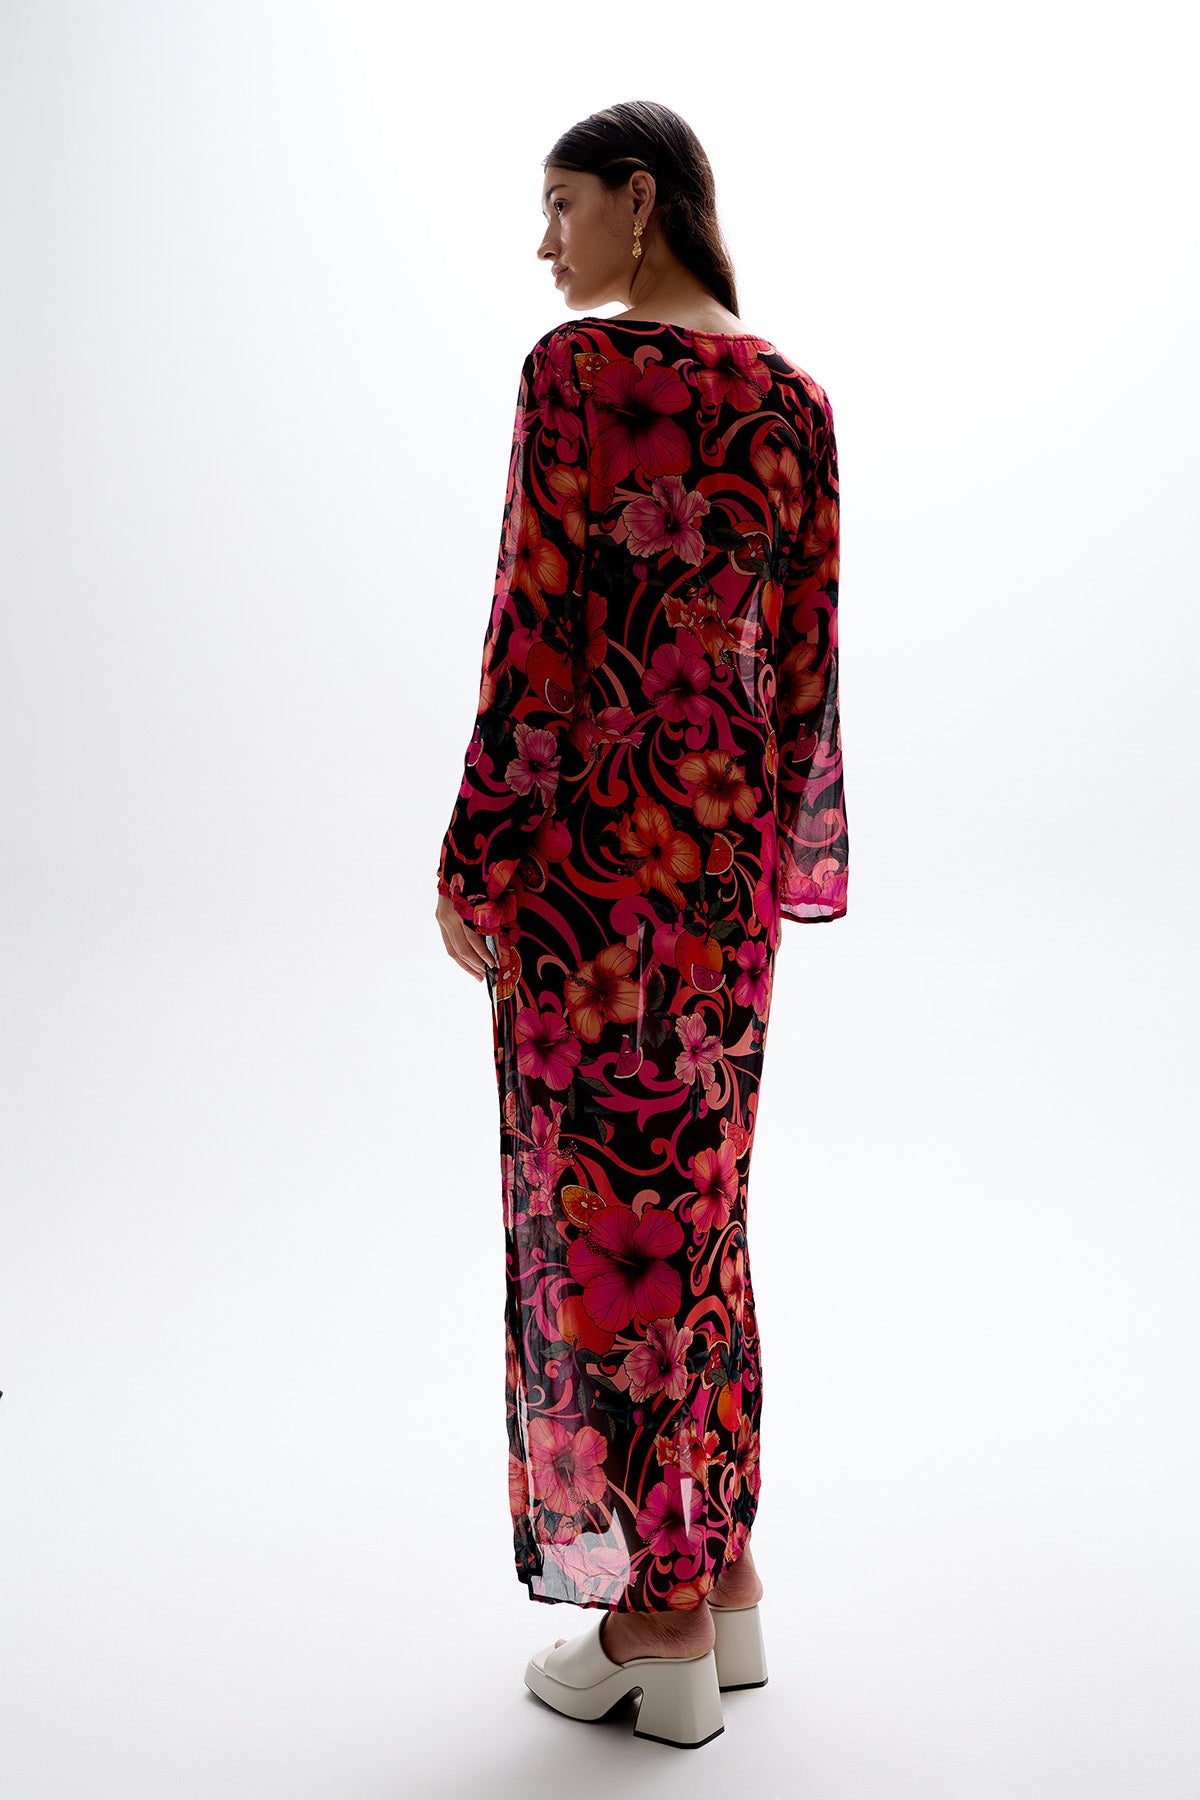 'Hotline' Maxi Dress - Hibiscus Pink